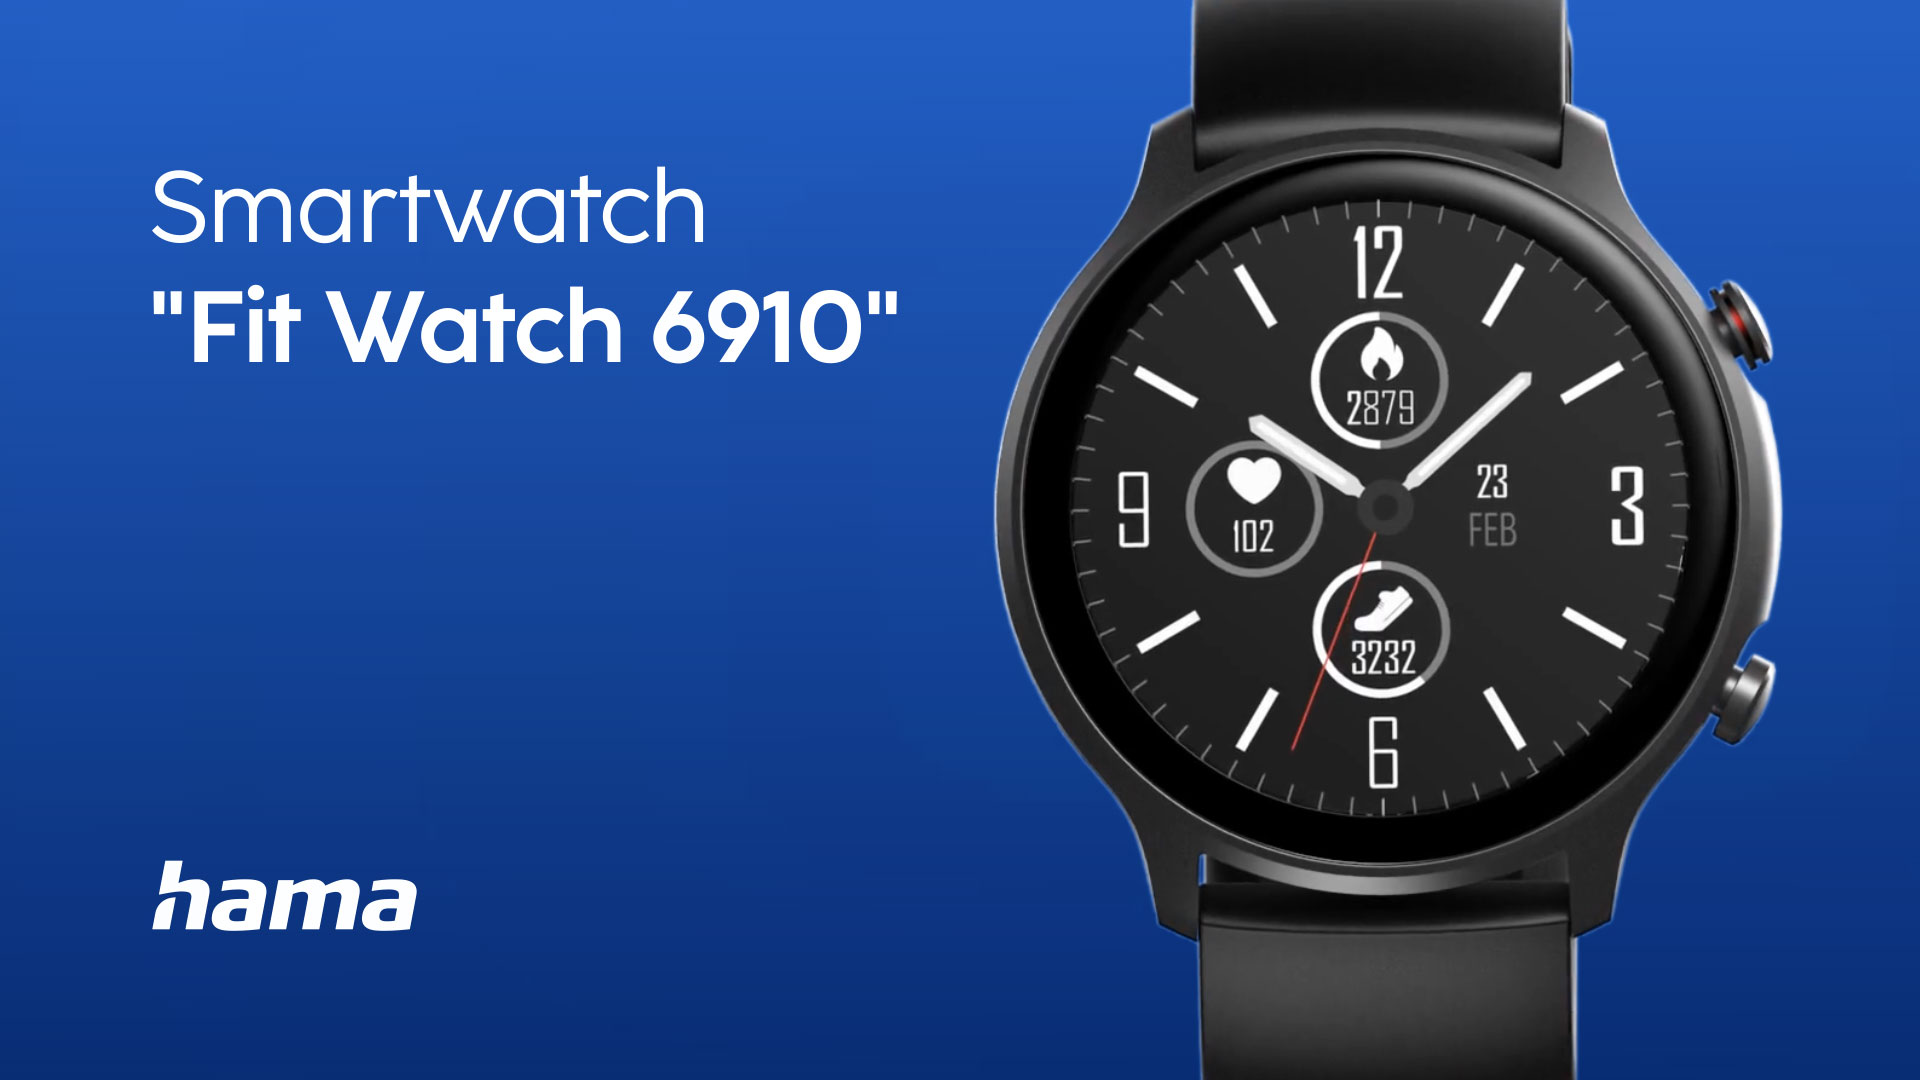 Hama Smartwatch "Fit Watch 6910“